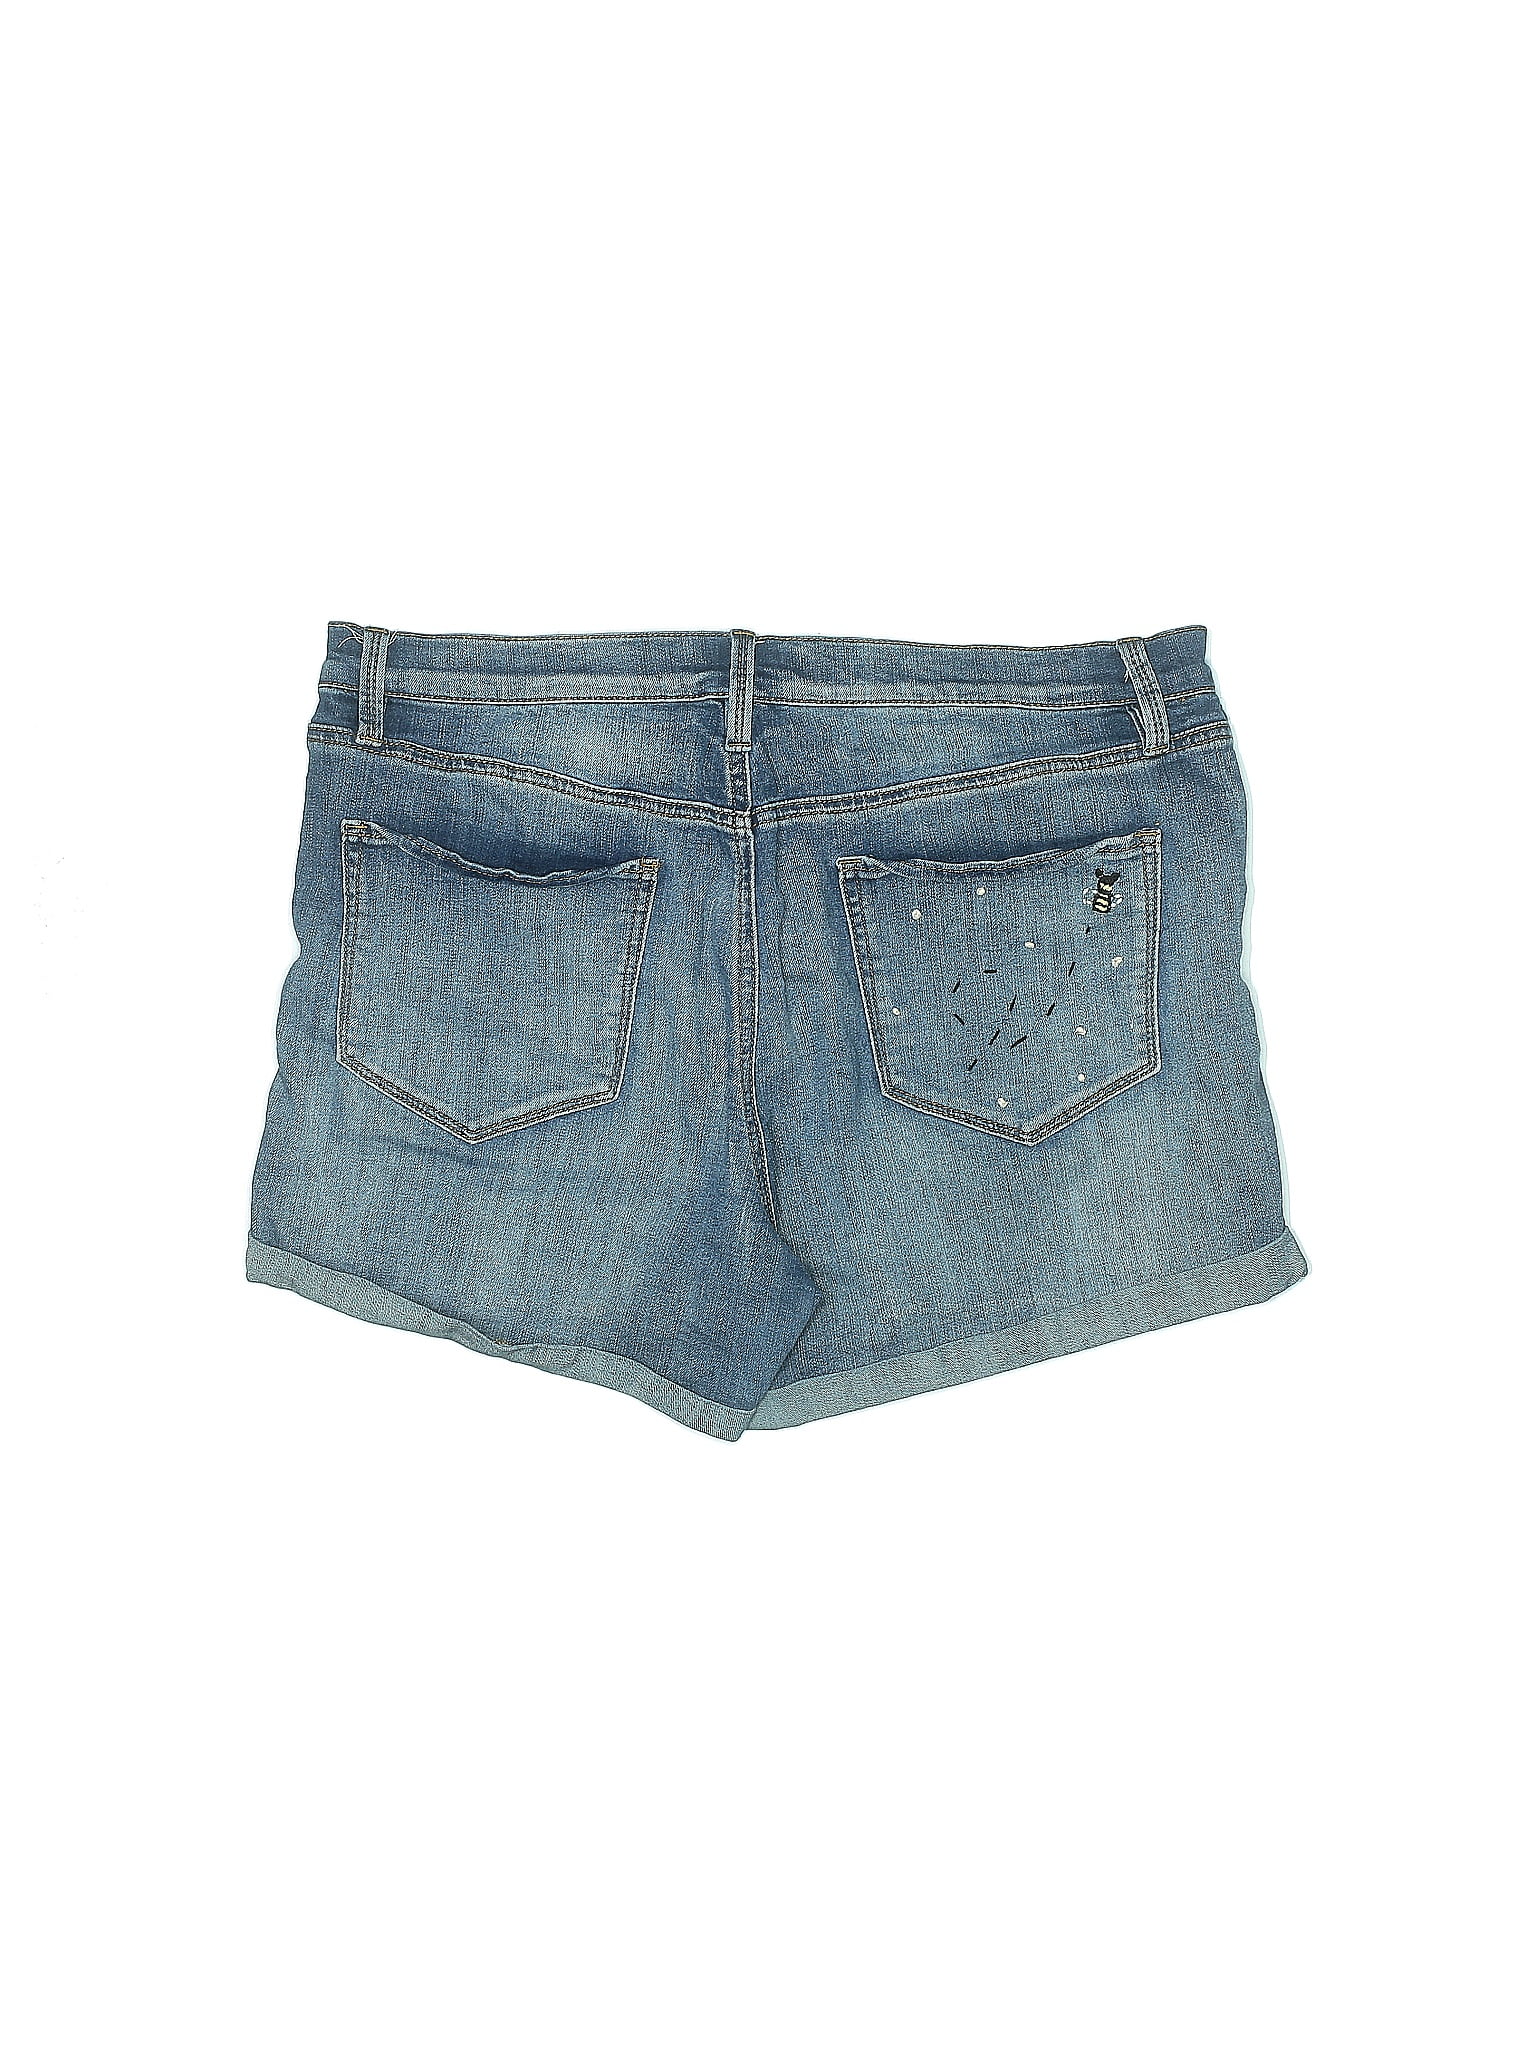 Mudd Solid Blue Denim Shorts Size 17 - 61% off